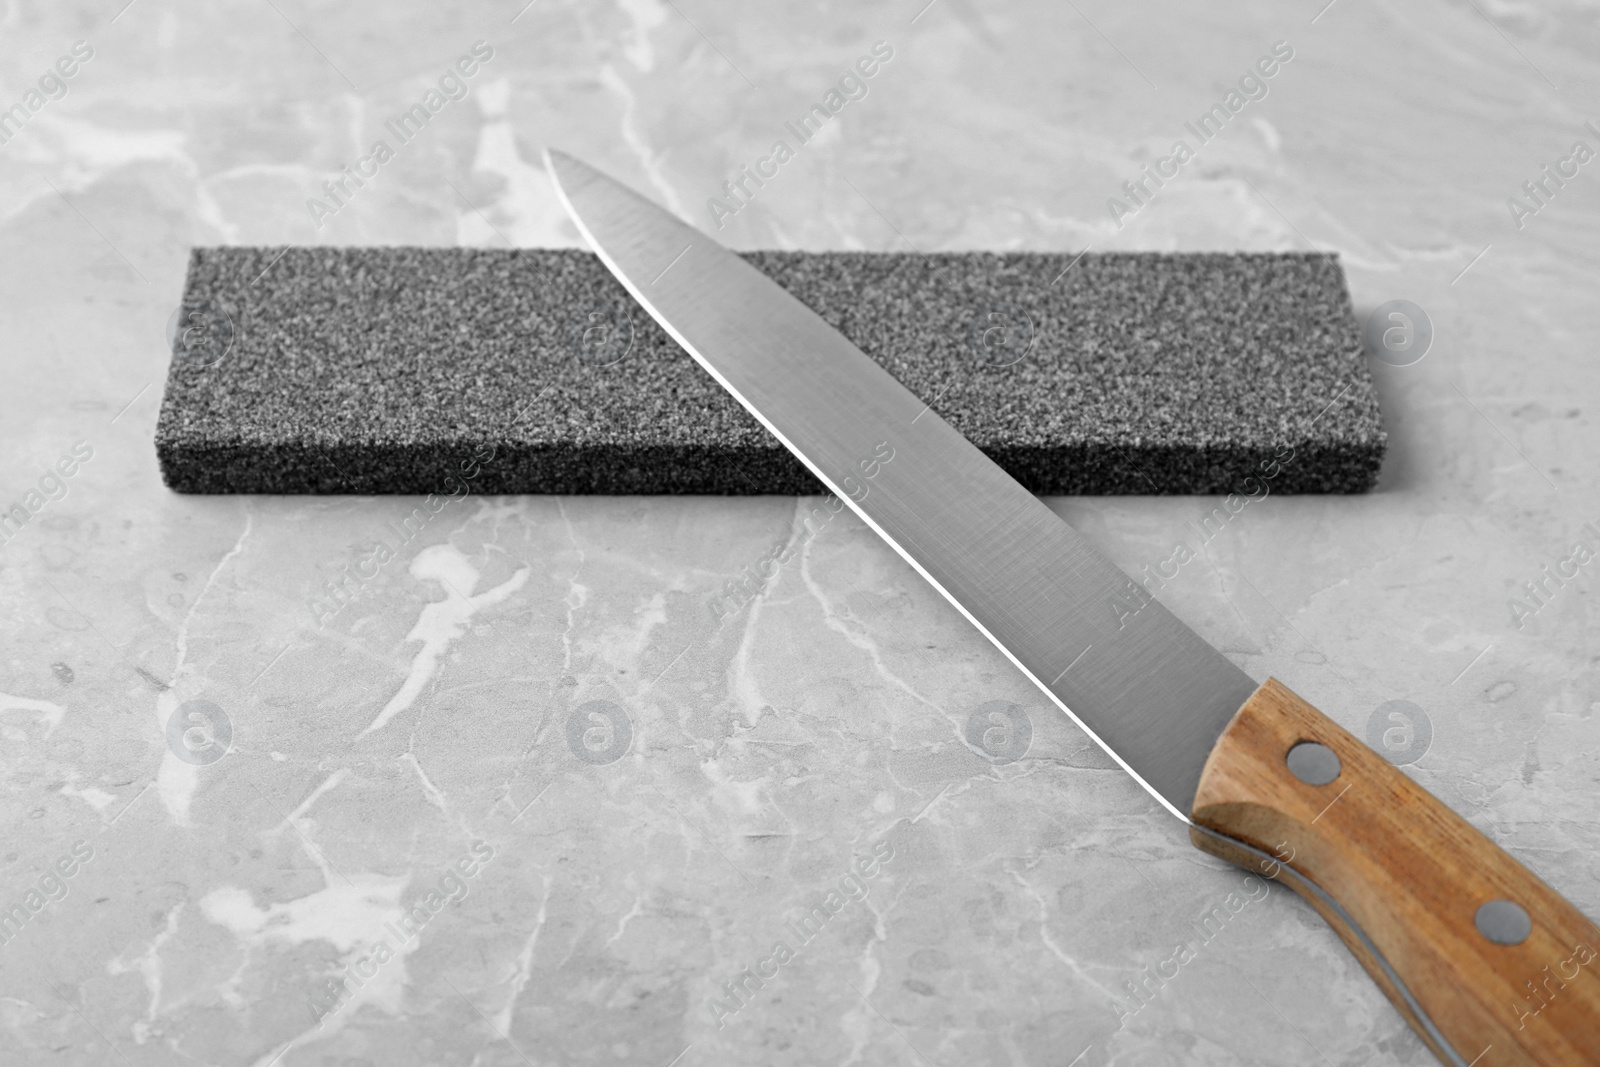 Photo of Knife and sharpening stone on grey background